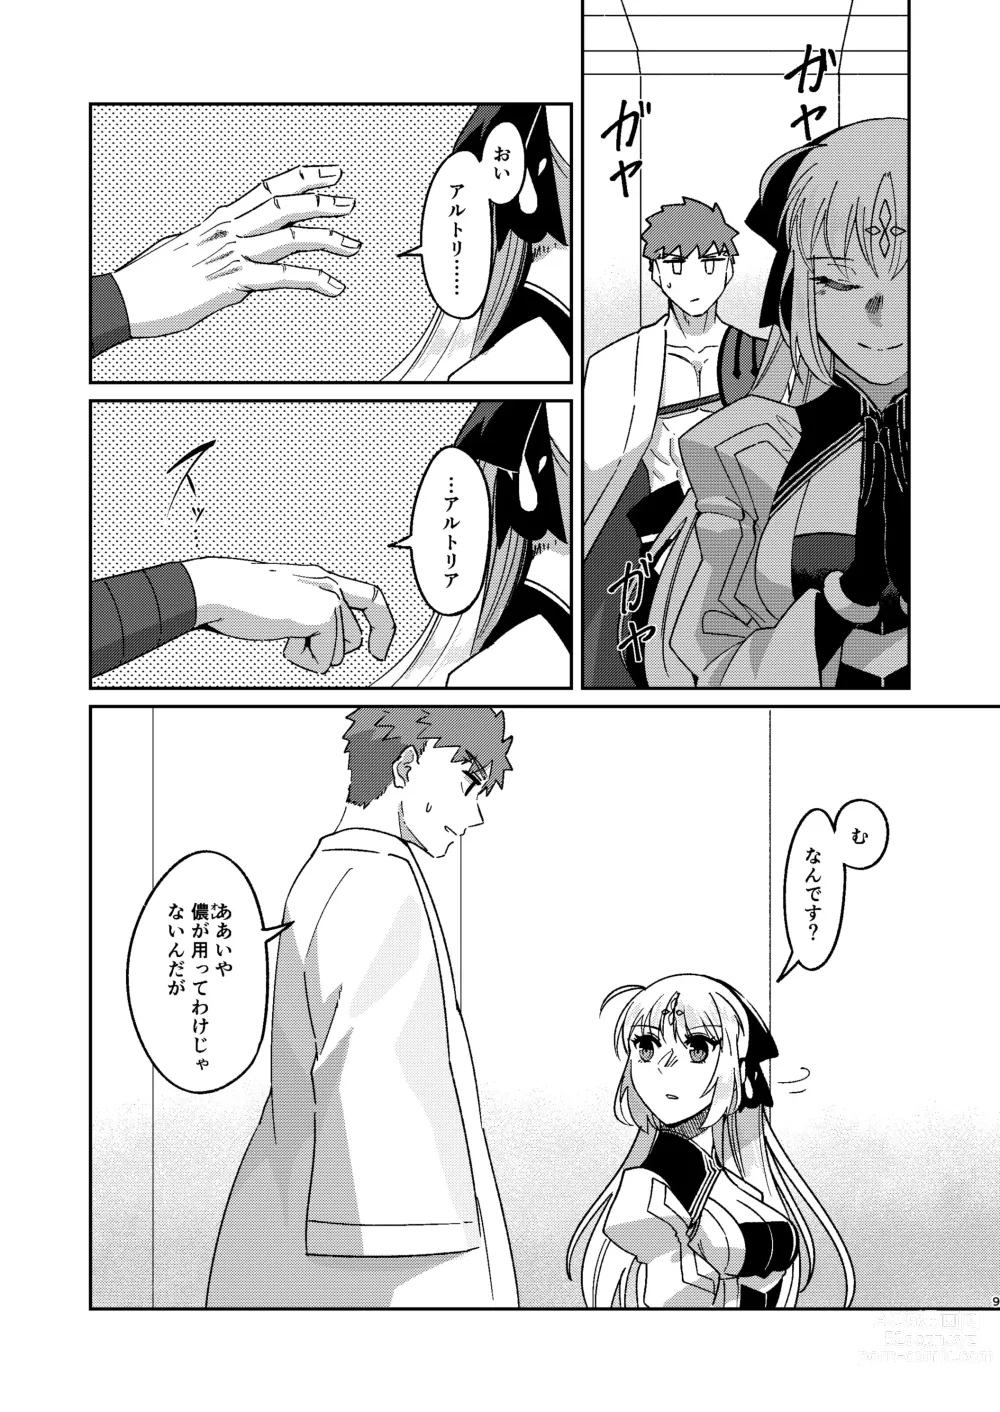 Page 8 of doujinshi Oazuke!